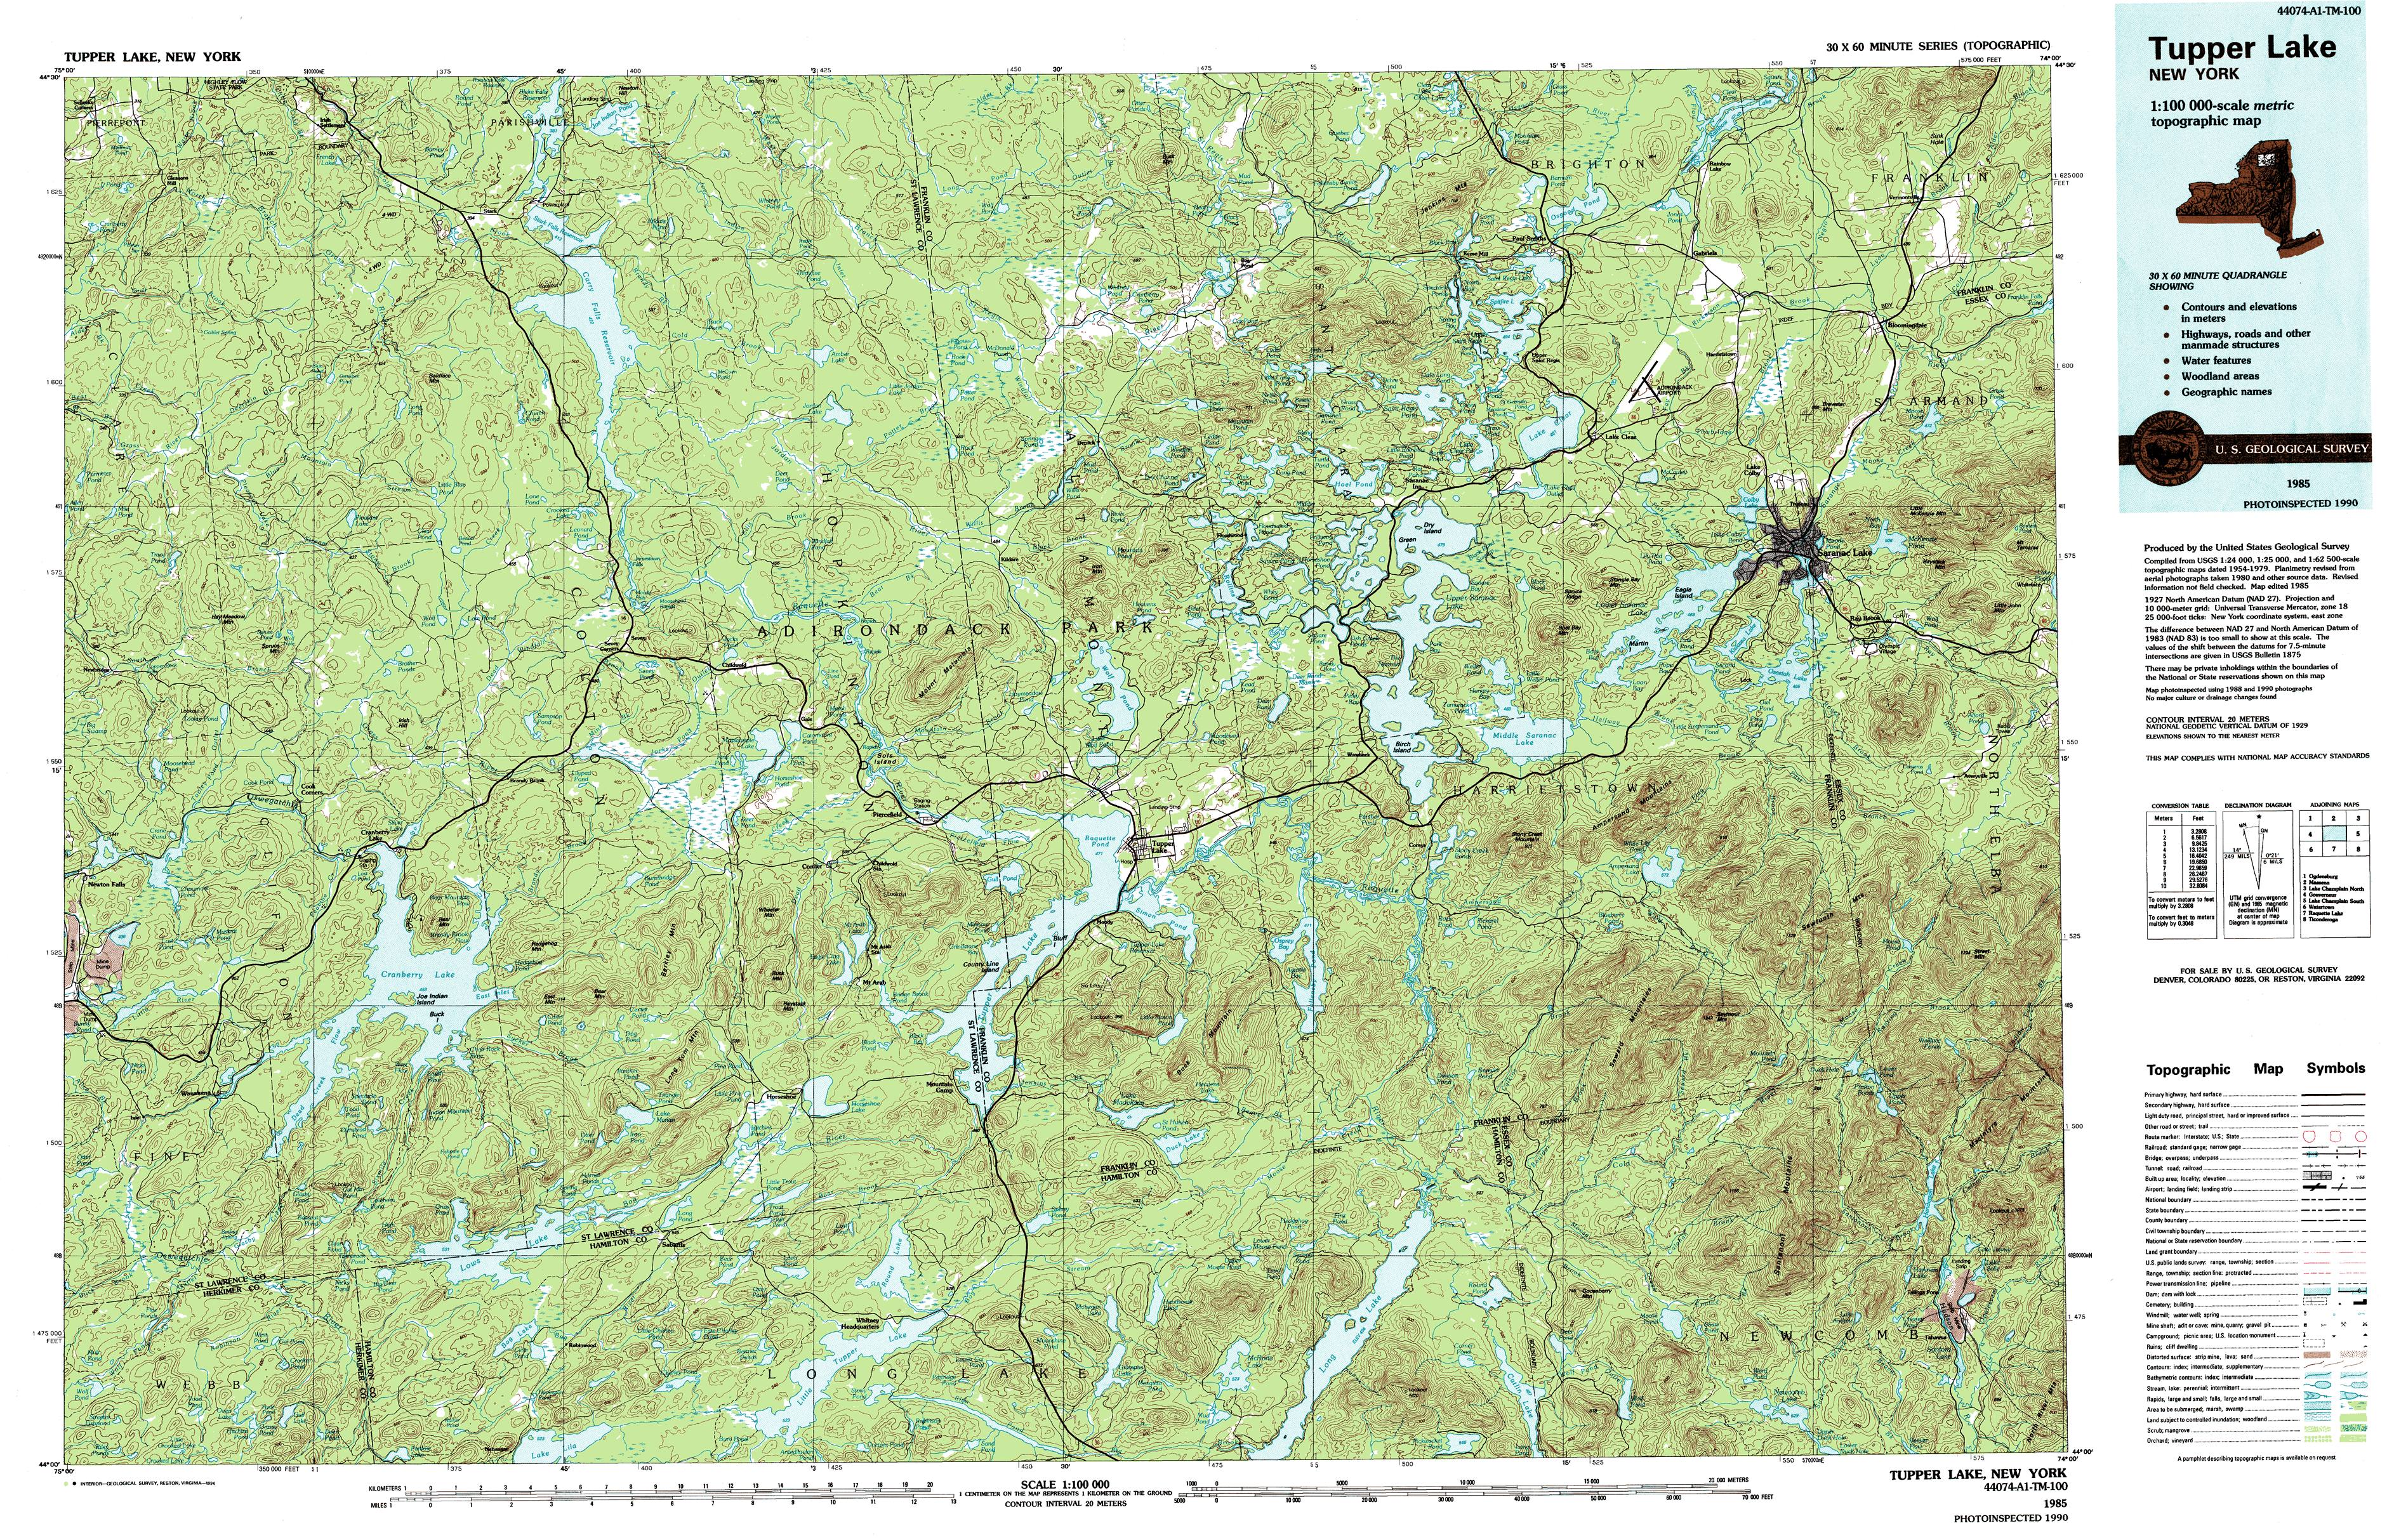 Tupper & Saranac Lake 1985 USGS Topographic Ma